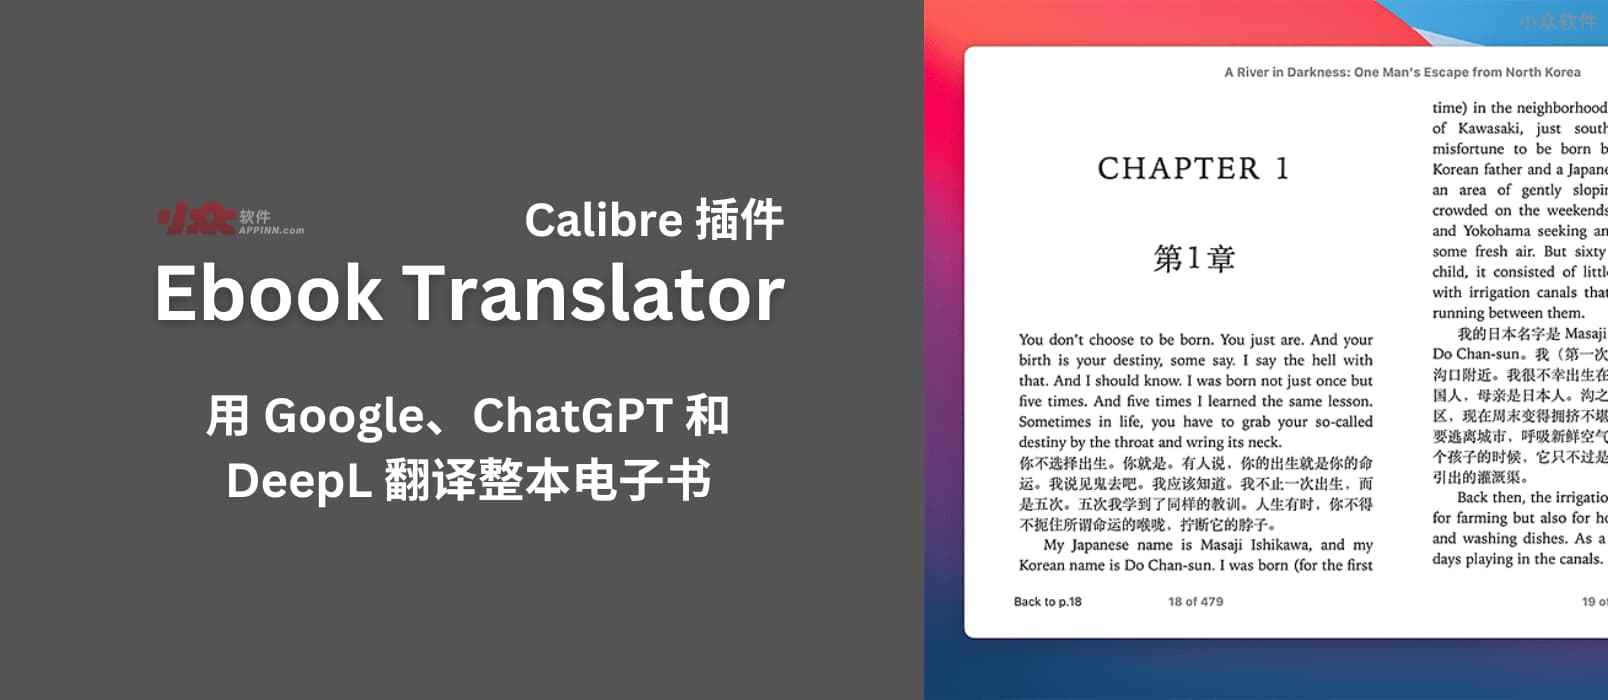 Ebook Translator - 用 Google、ChatGPT 和 DeepL 翻译整本电子书[Calibre 插件]